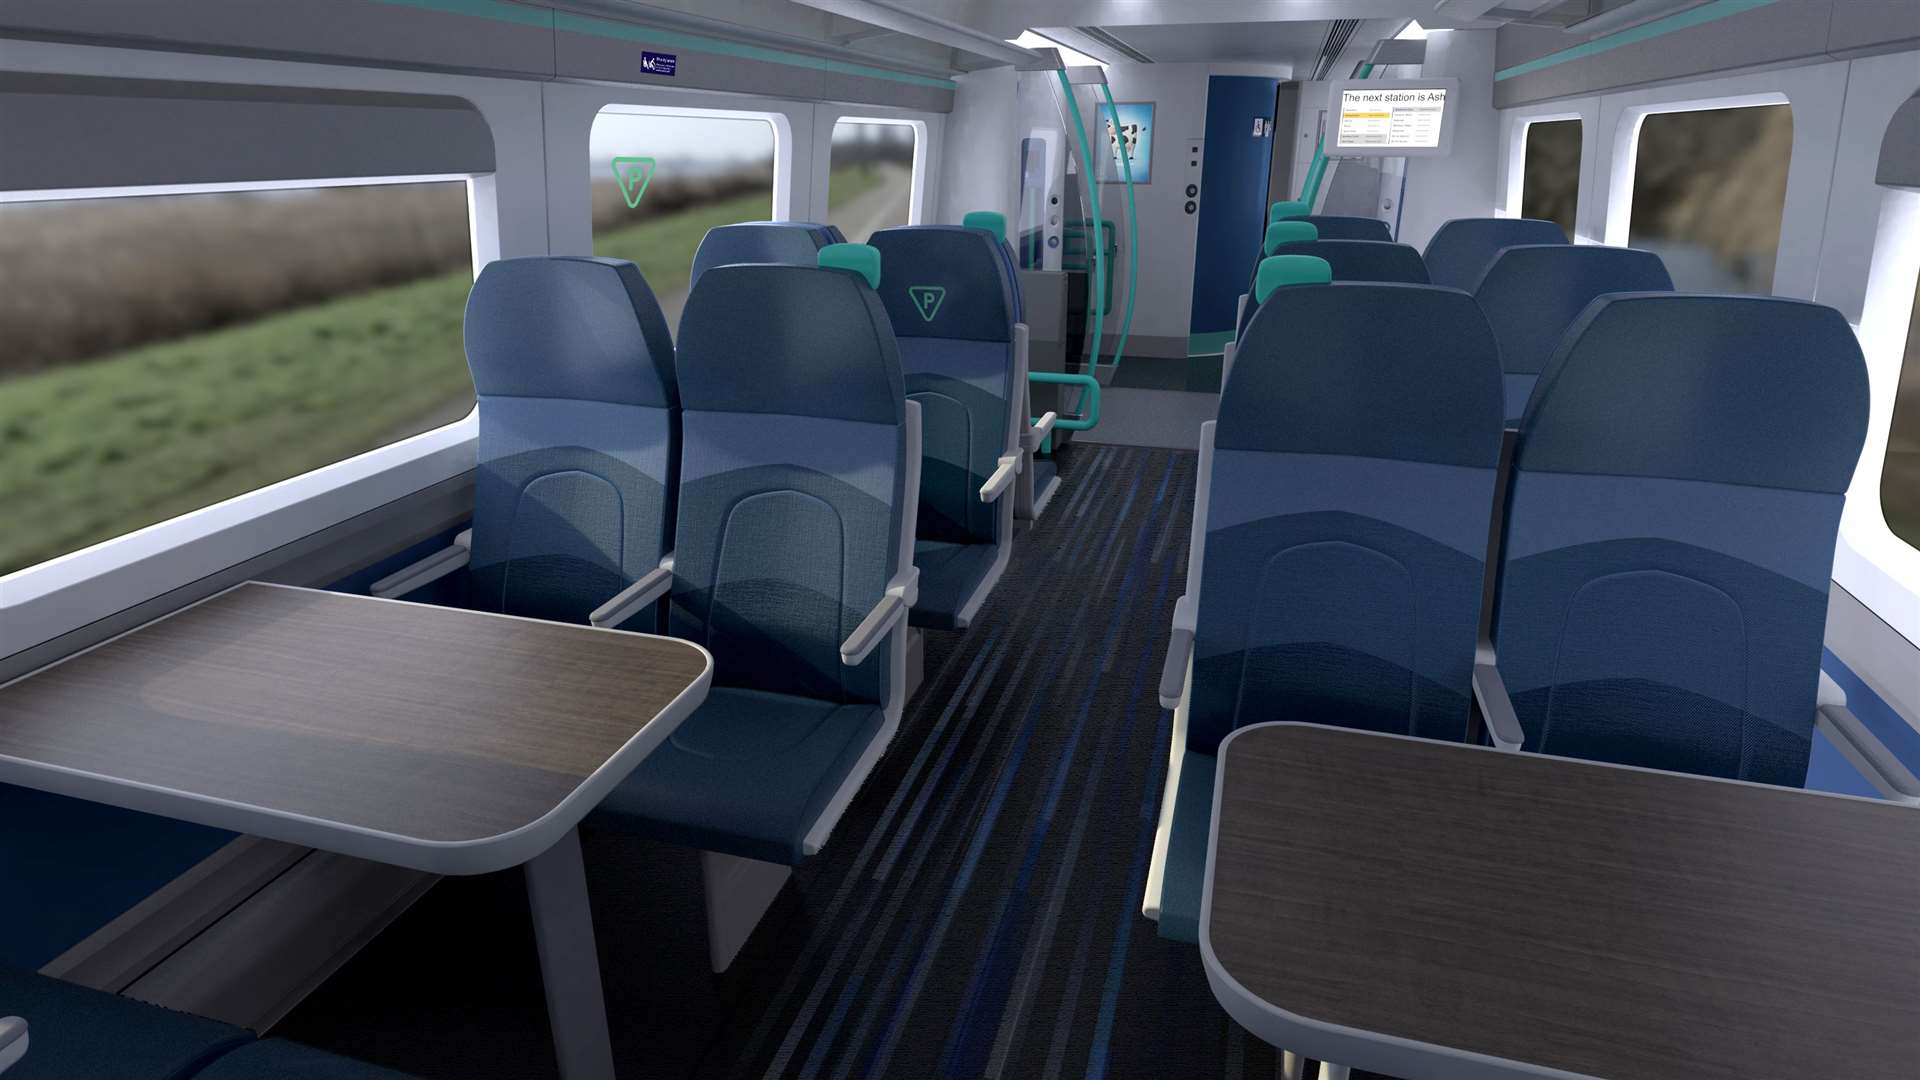 The new saloon design on Javelin trains (59972097)